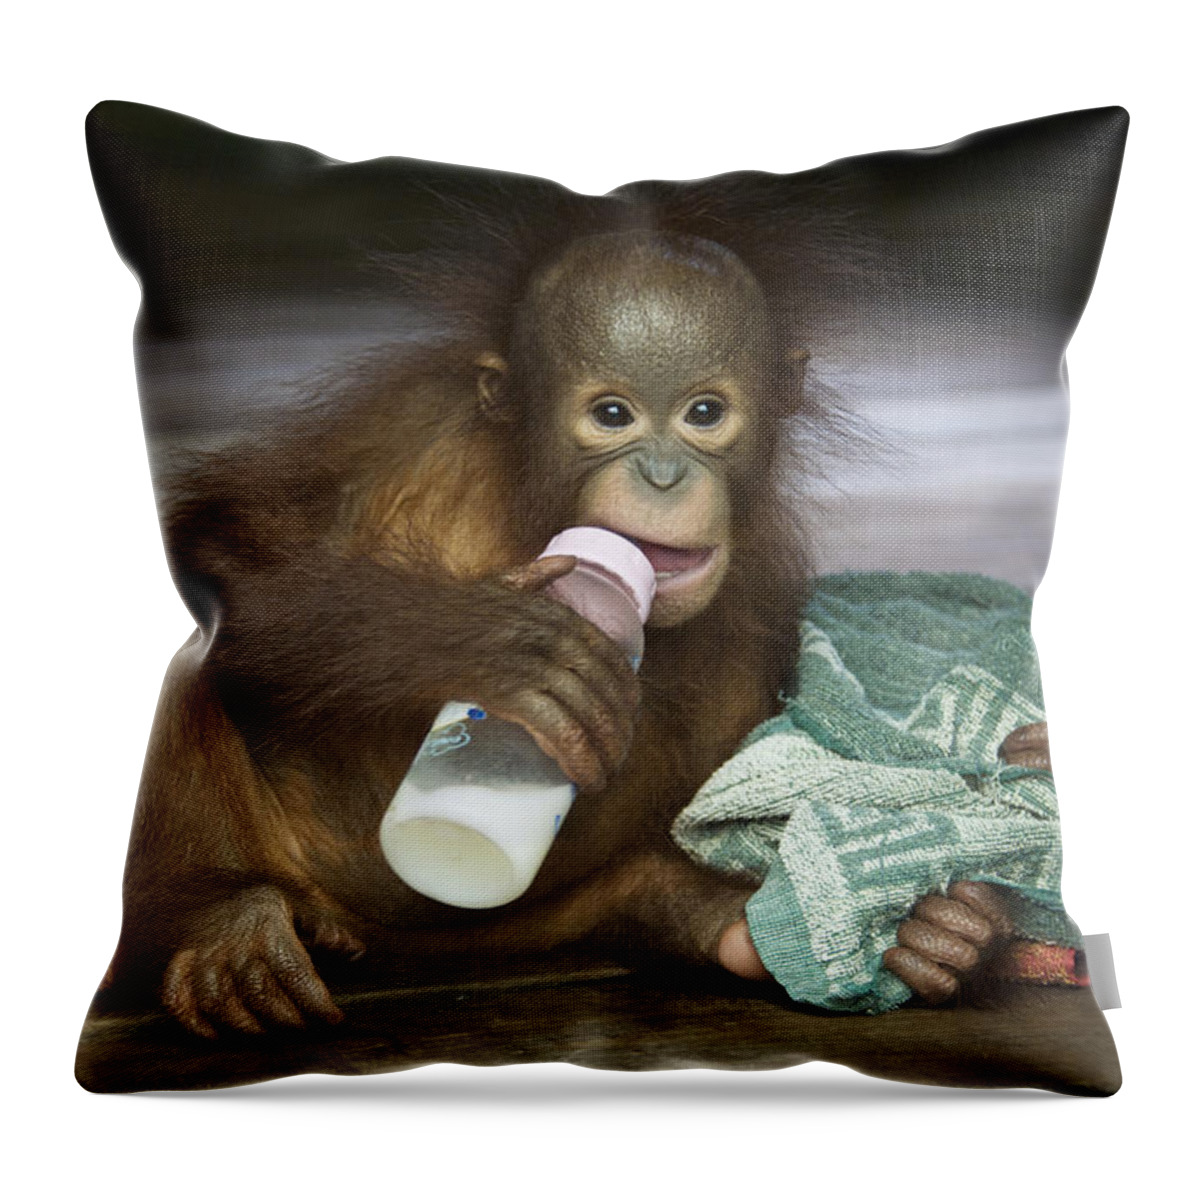 00498062 Throw Pillow featuring the photograph Orangutan Yr Old Infant Bottle Feeding by Suzi Eszterhas